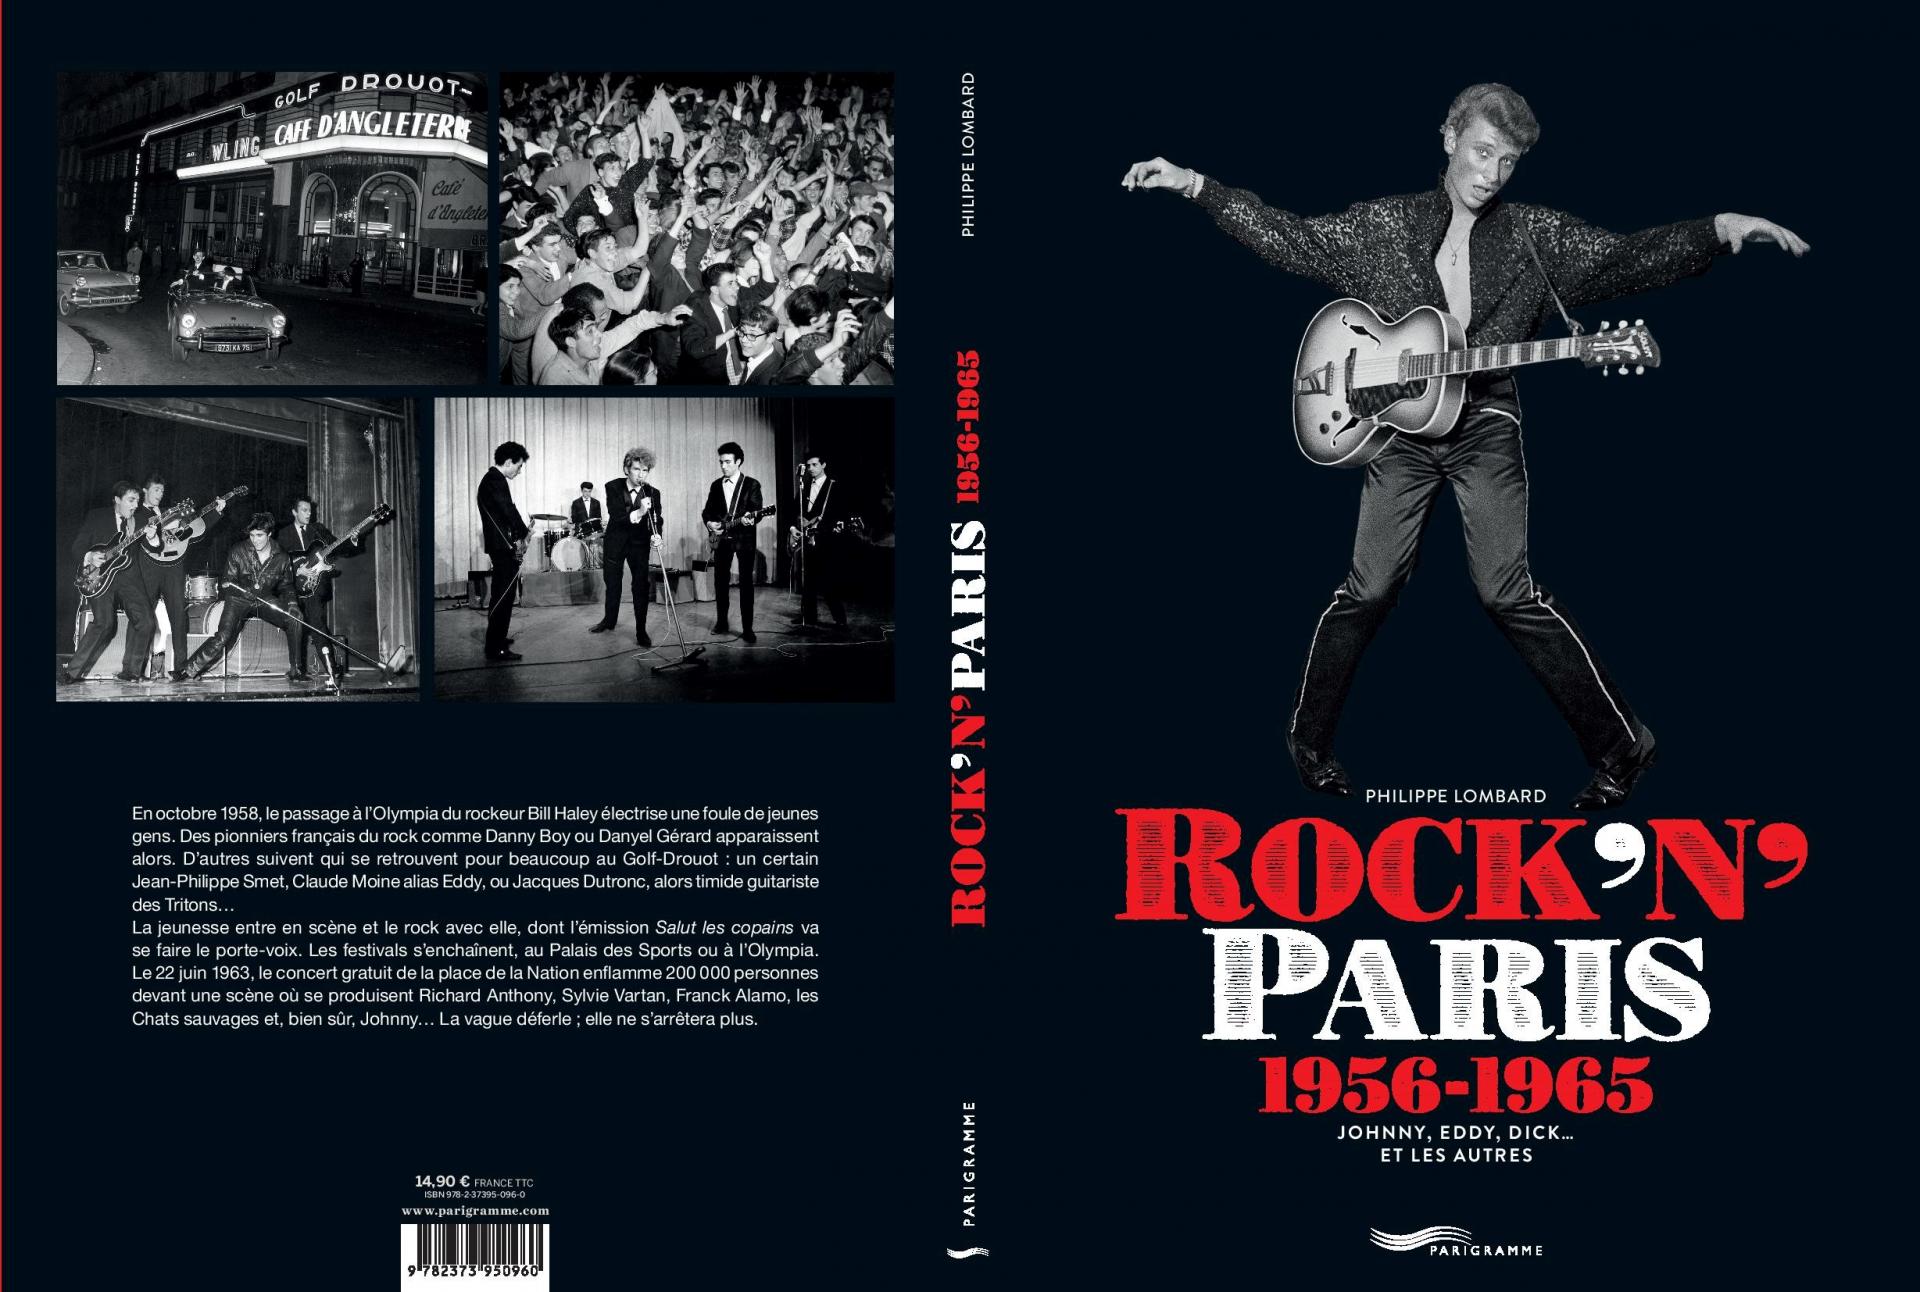 Rock n paris couv 2019 bat1 page 001